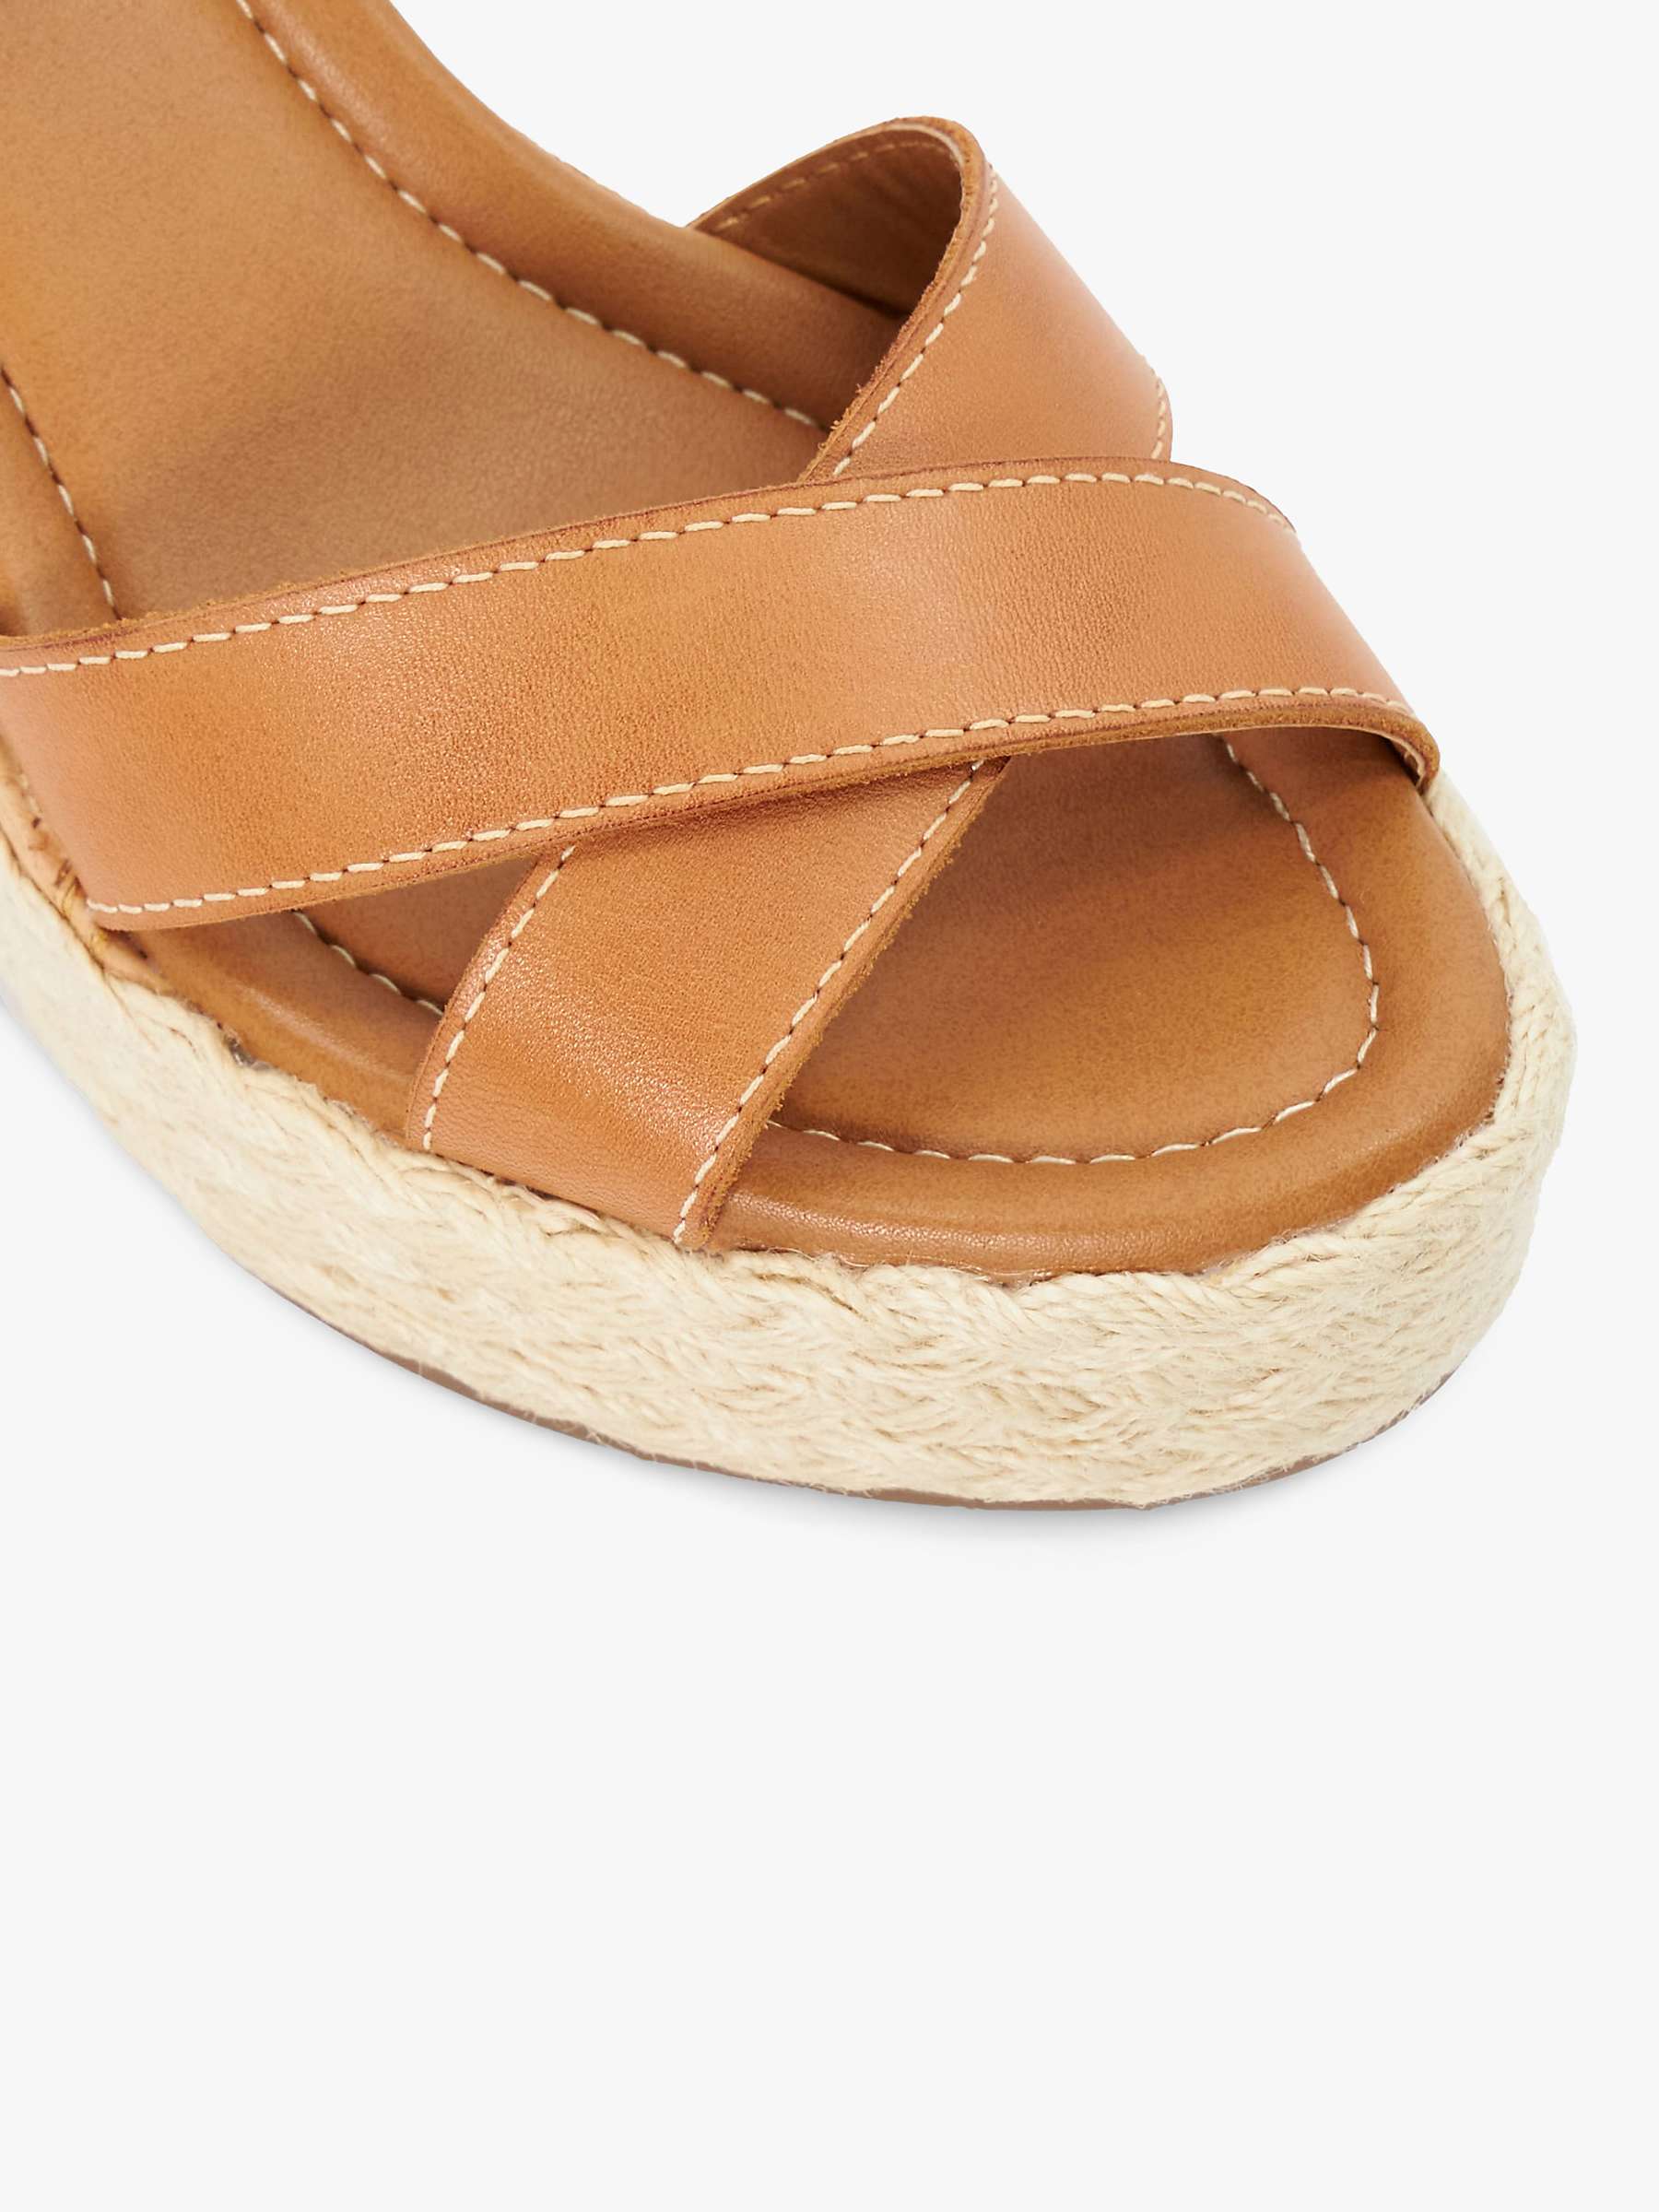 Buy Dune Kindest Leather Cross Strap Wedge Sandals Online at johnlewis.com